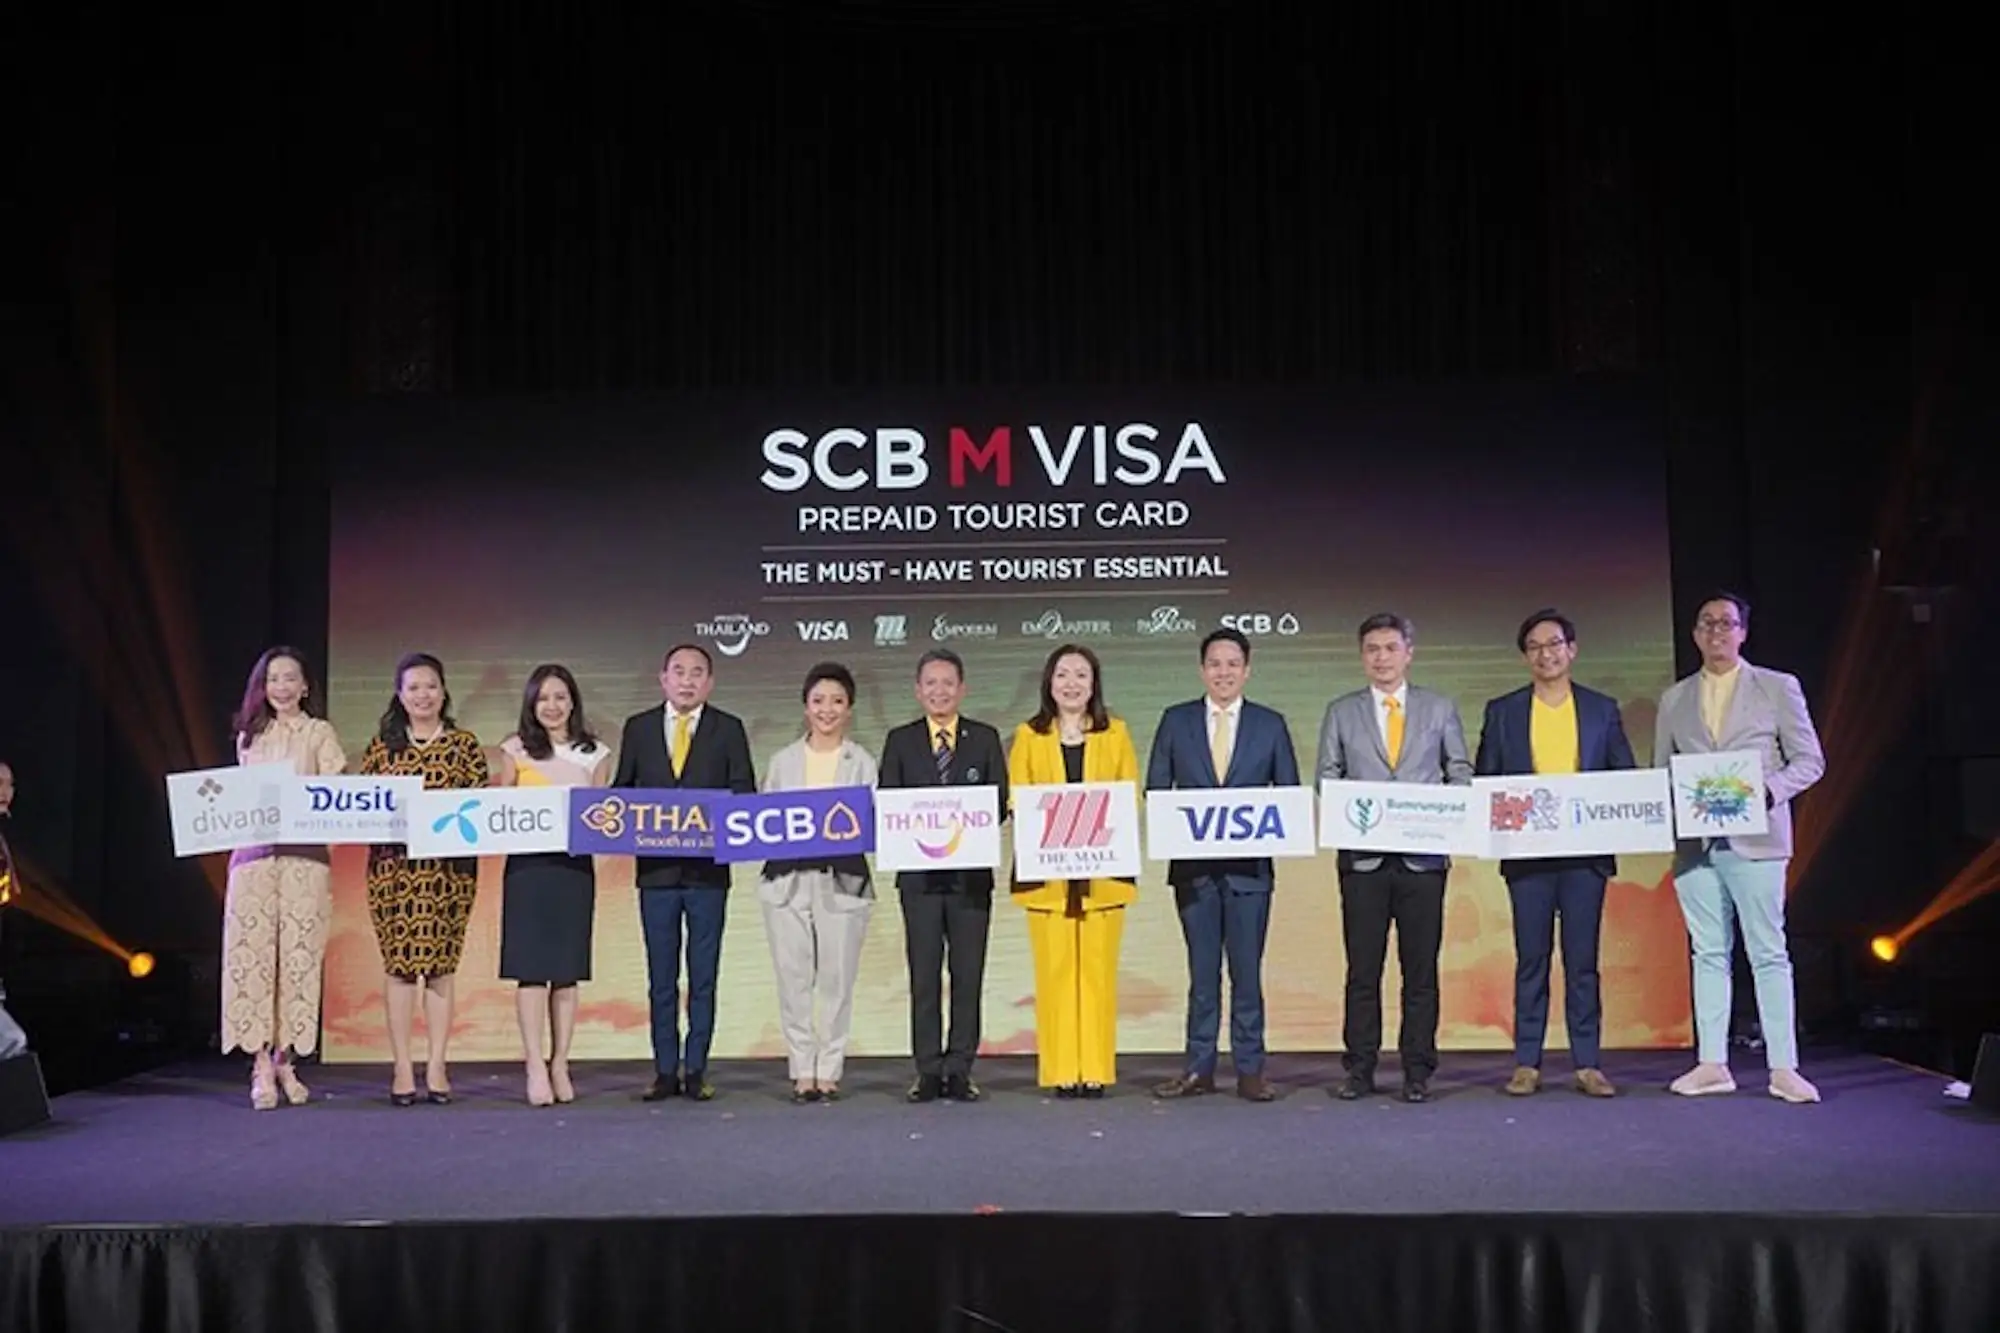 SCB M Visa 泰國匯商銀行 The Mall 泰國 Visa 泰國觀光局